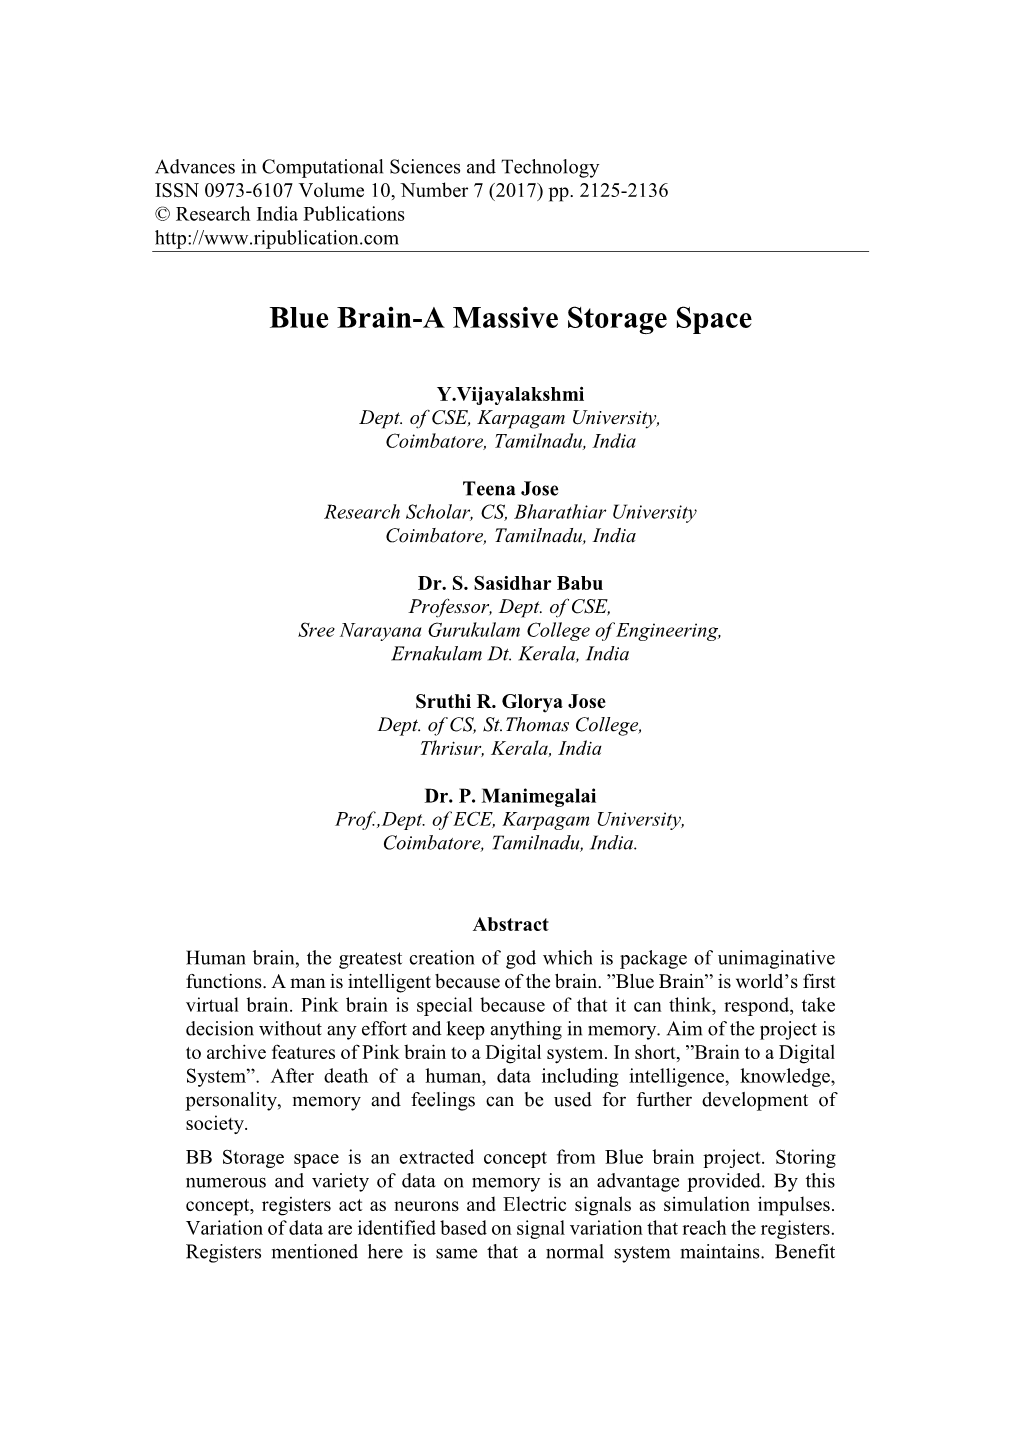 Blue Brain-A Massive Storage Space